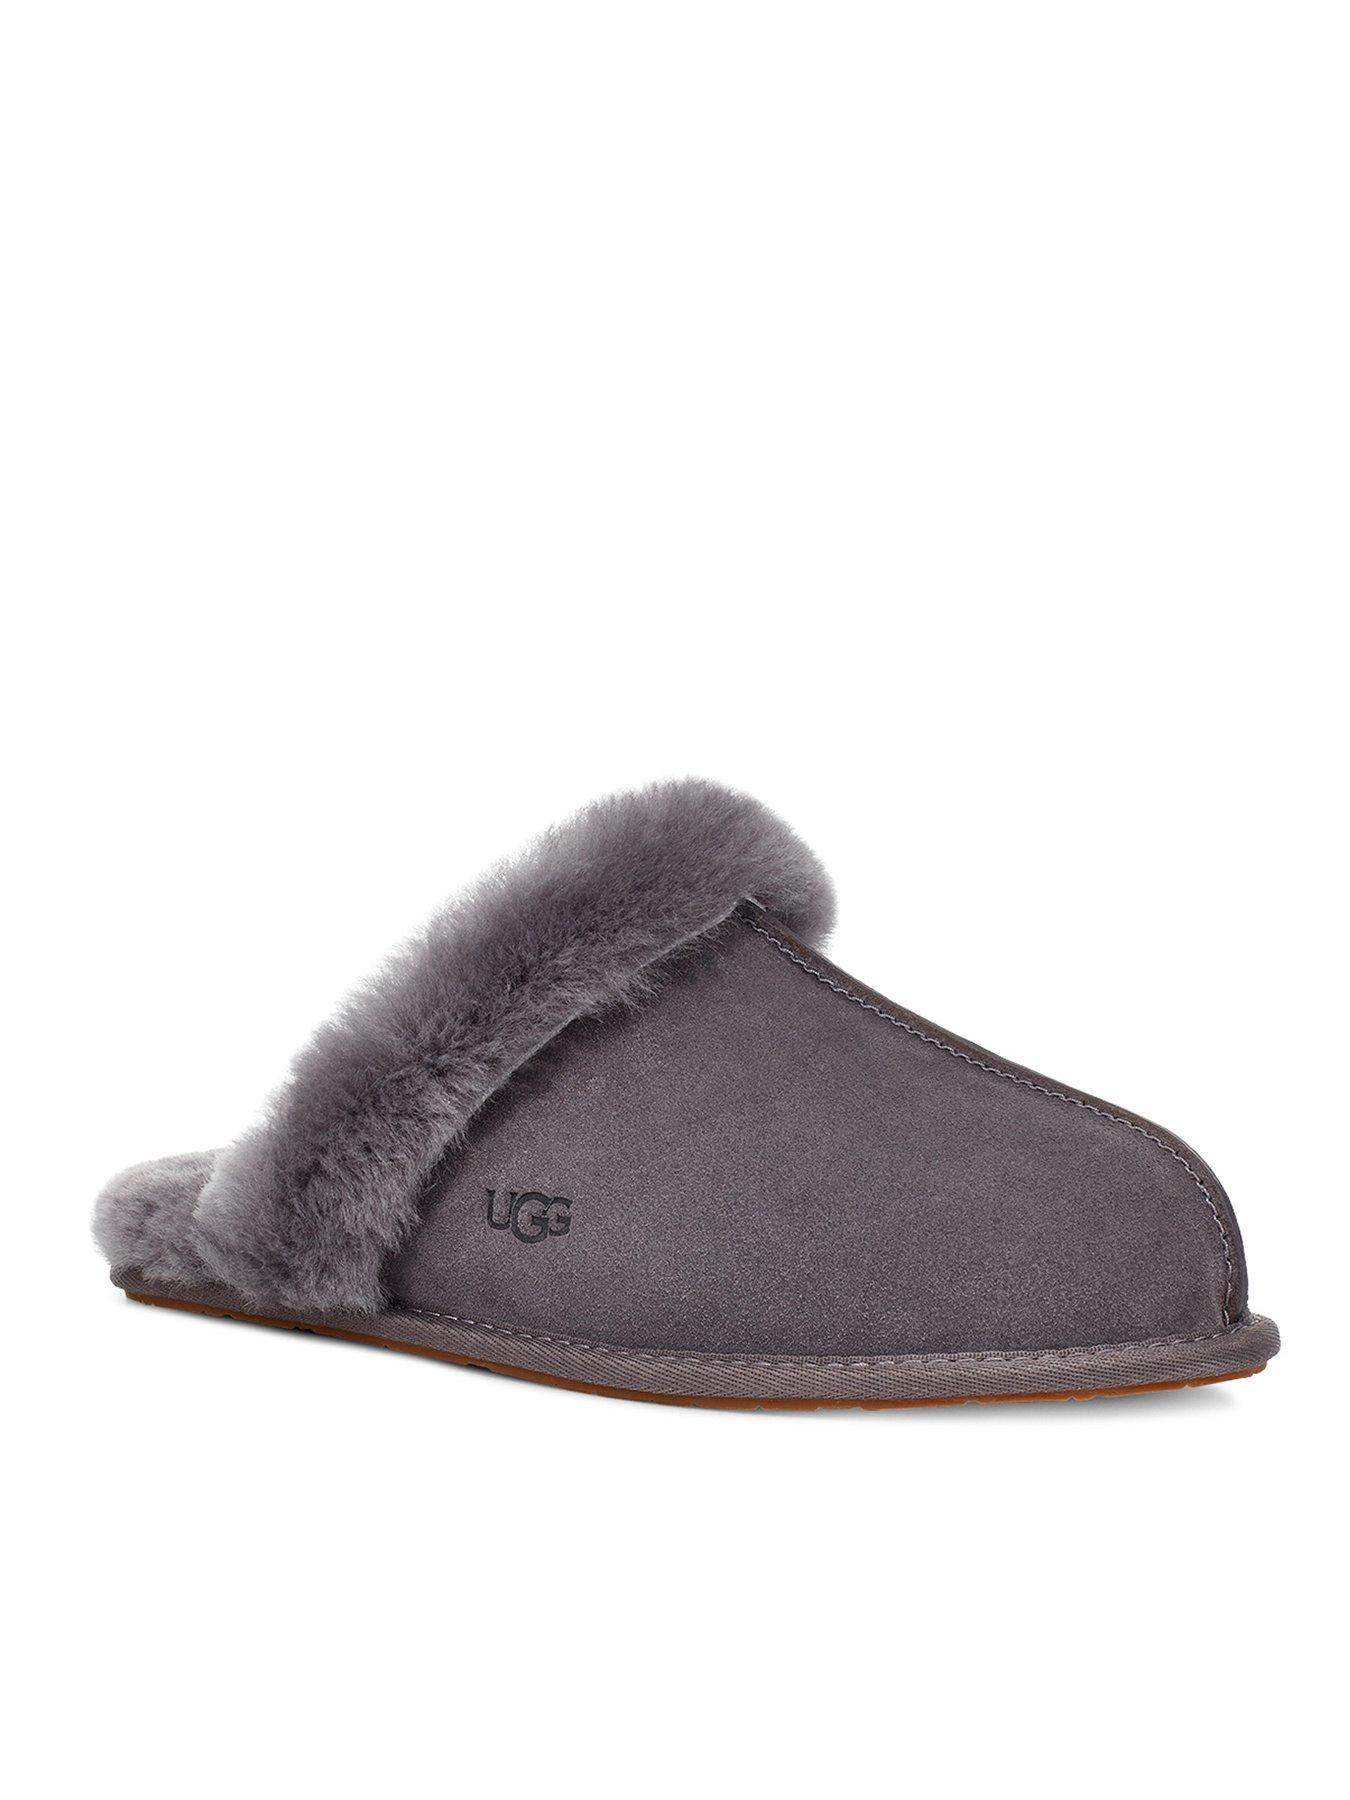 womens ugg slippers gray